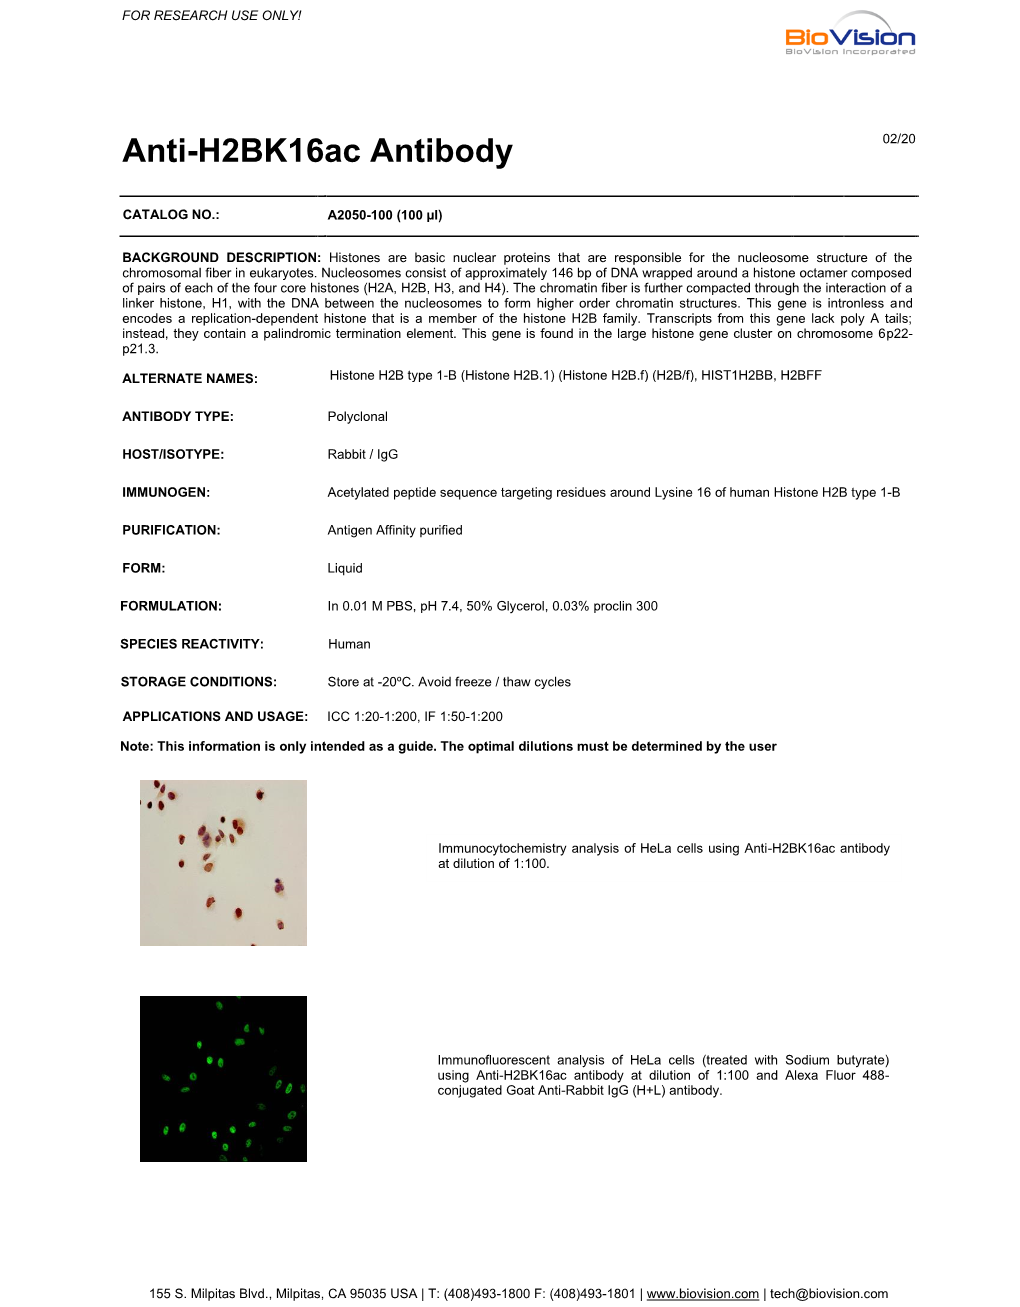 Anti-H2bk16ac Antibody